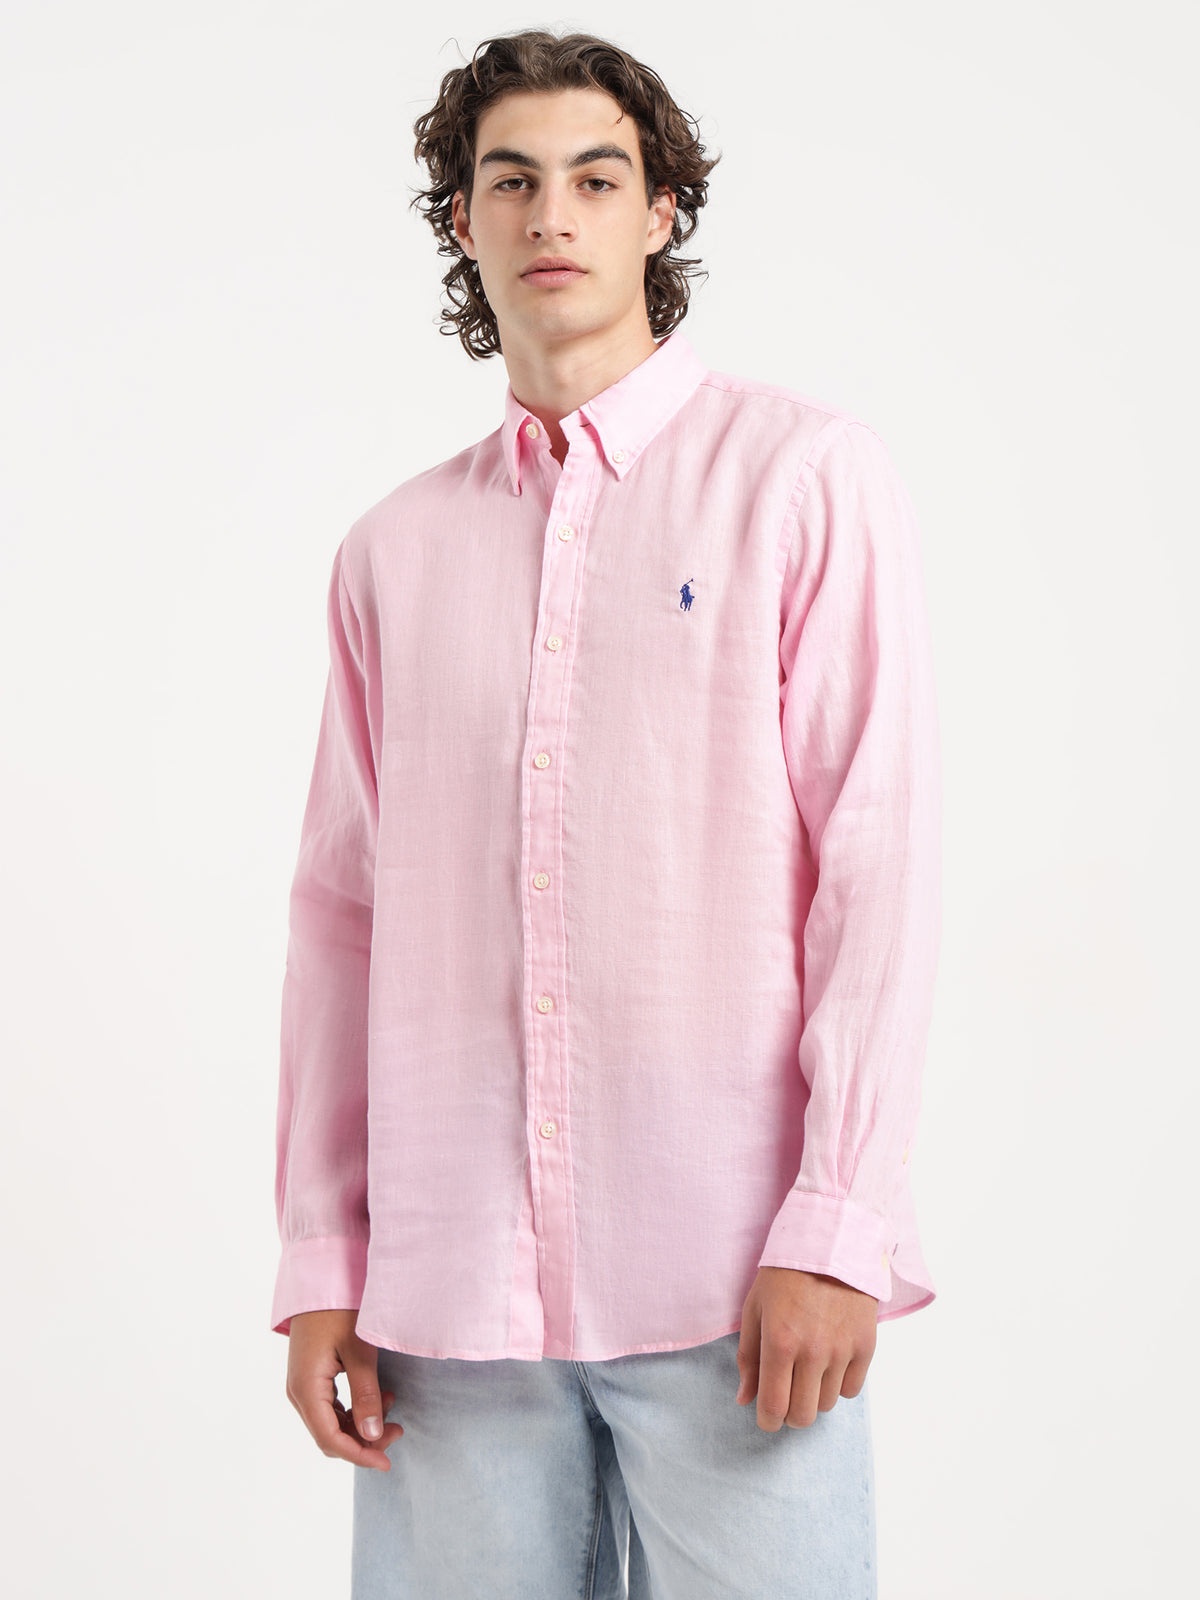 Long Sleeve Sport Button Up Shirt in Pink